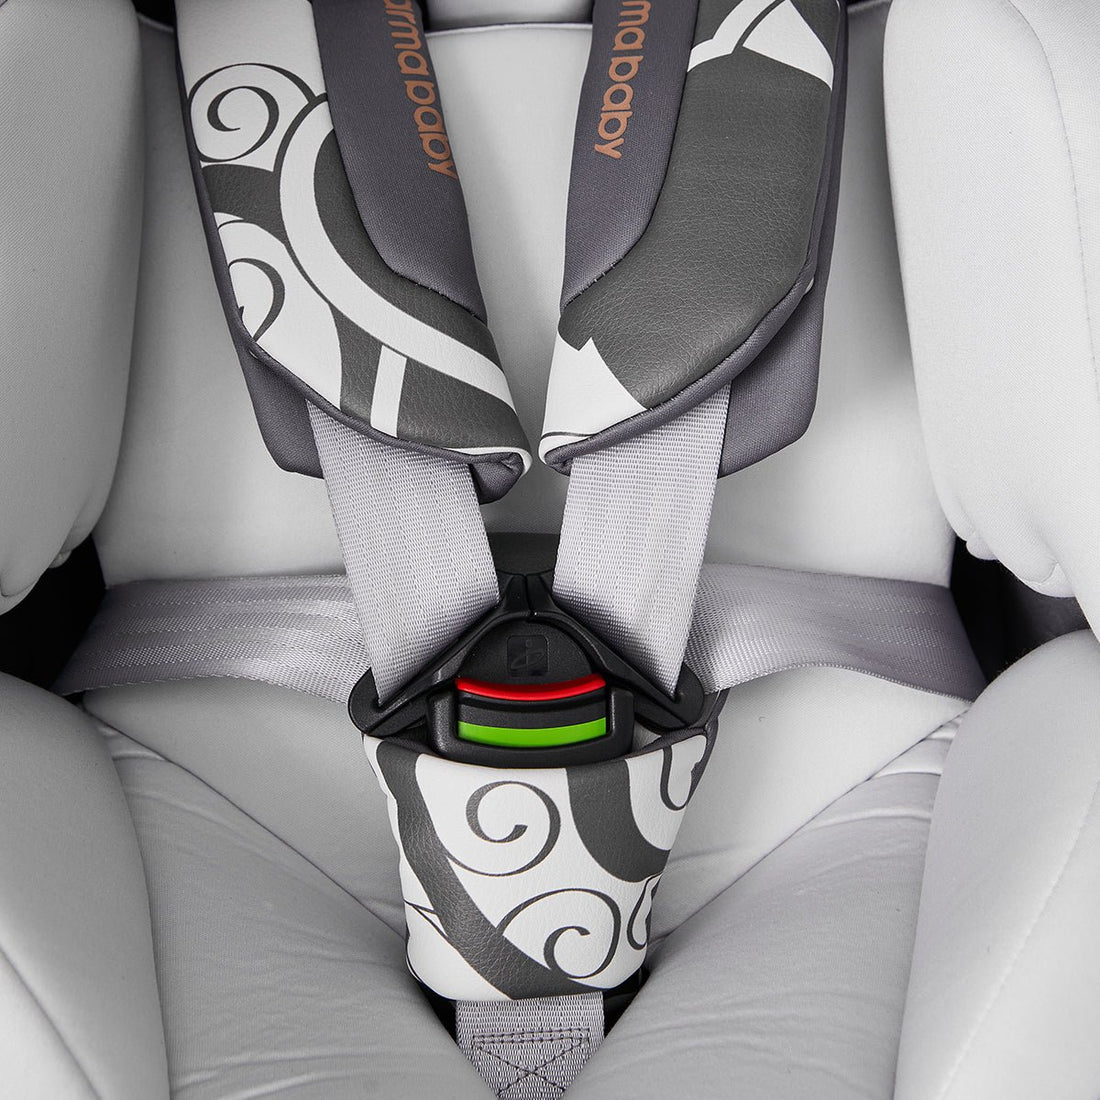 Angel Guardian 0-12 Years 360° Rotation Grey Car Seat - 0cm